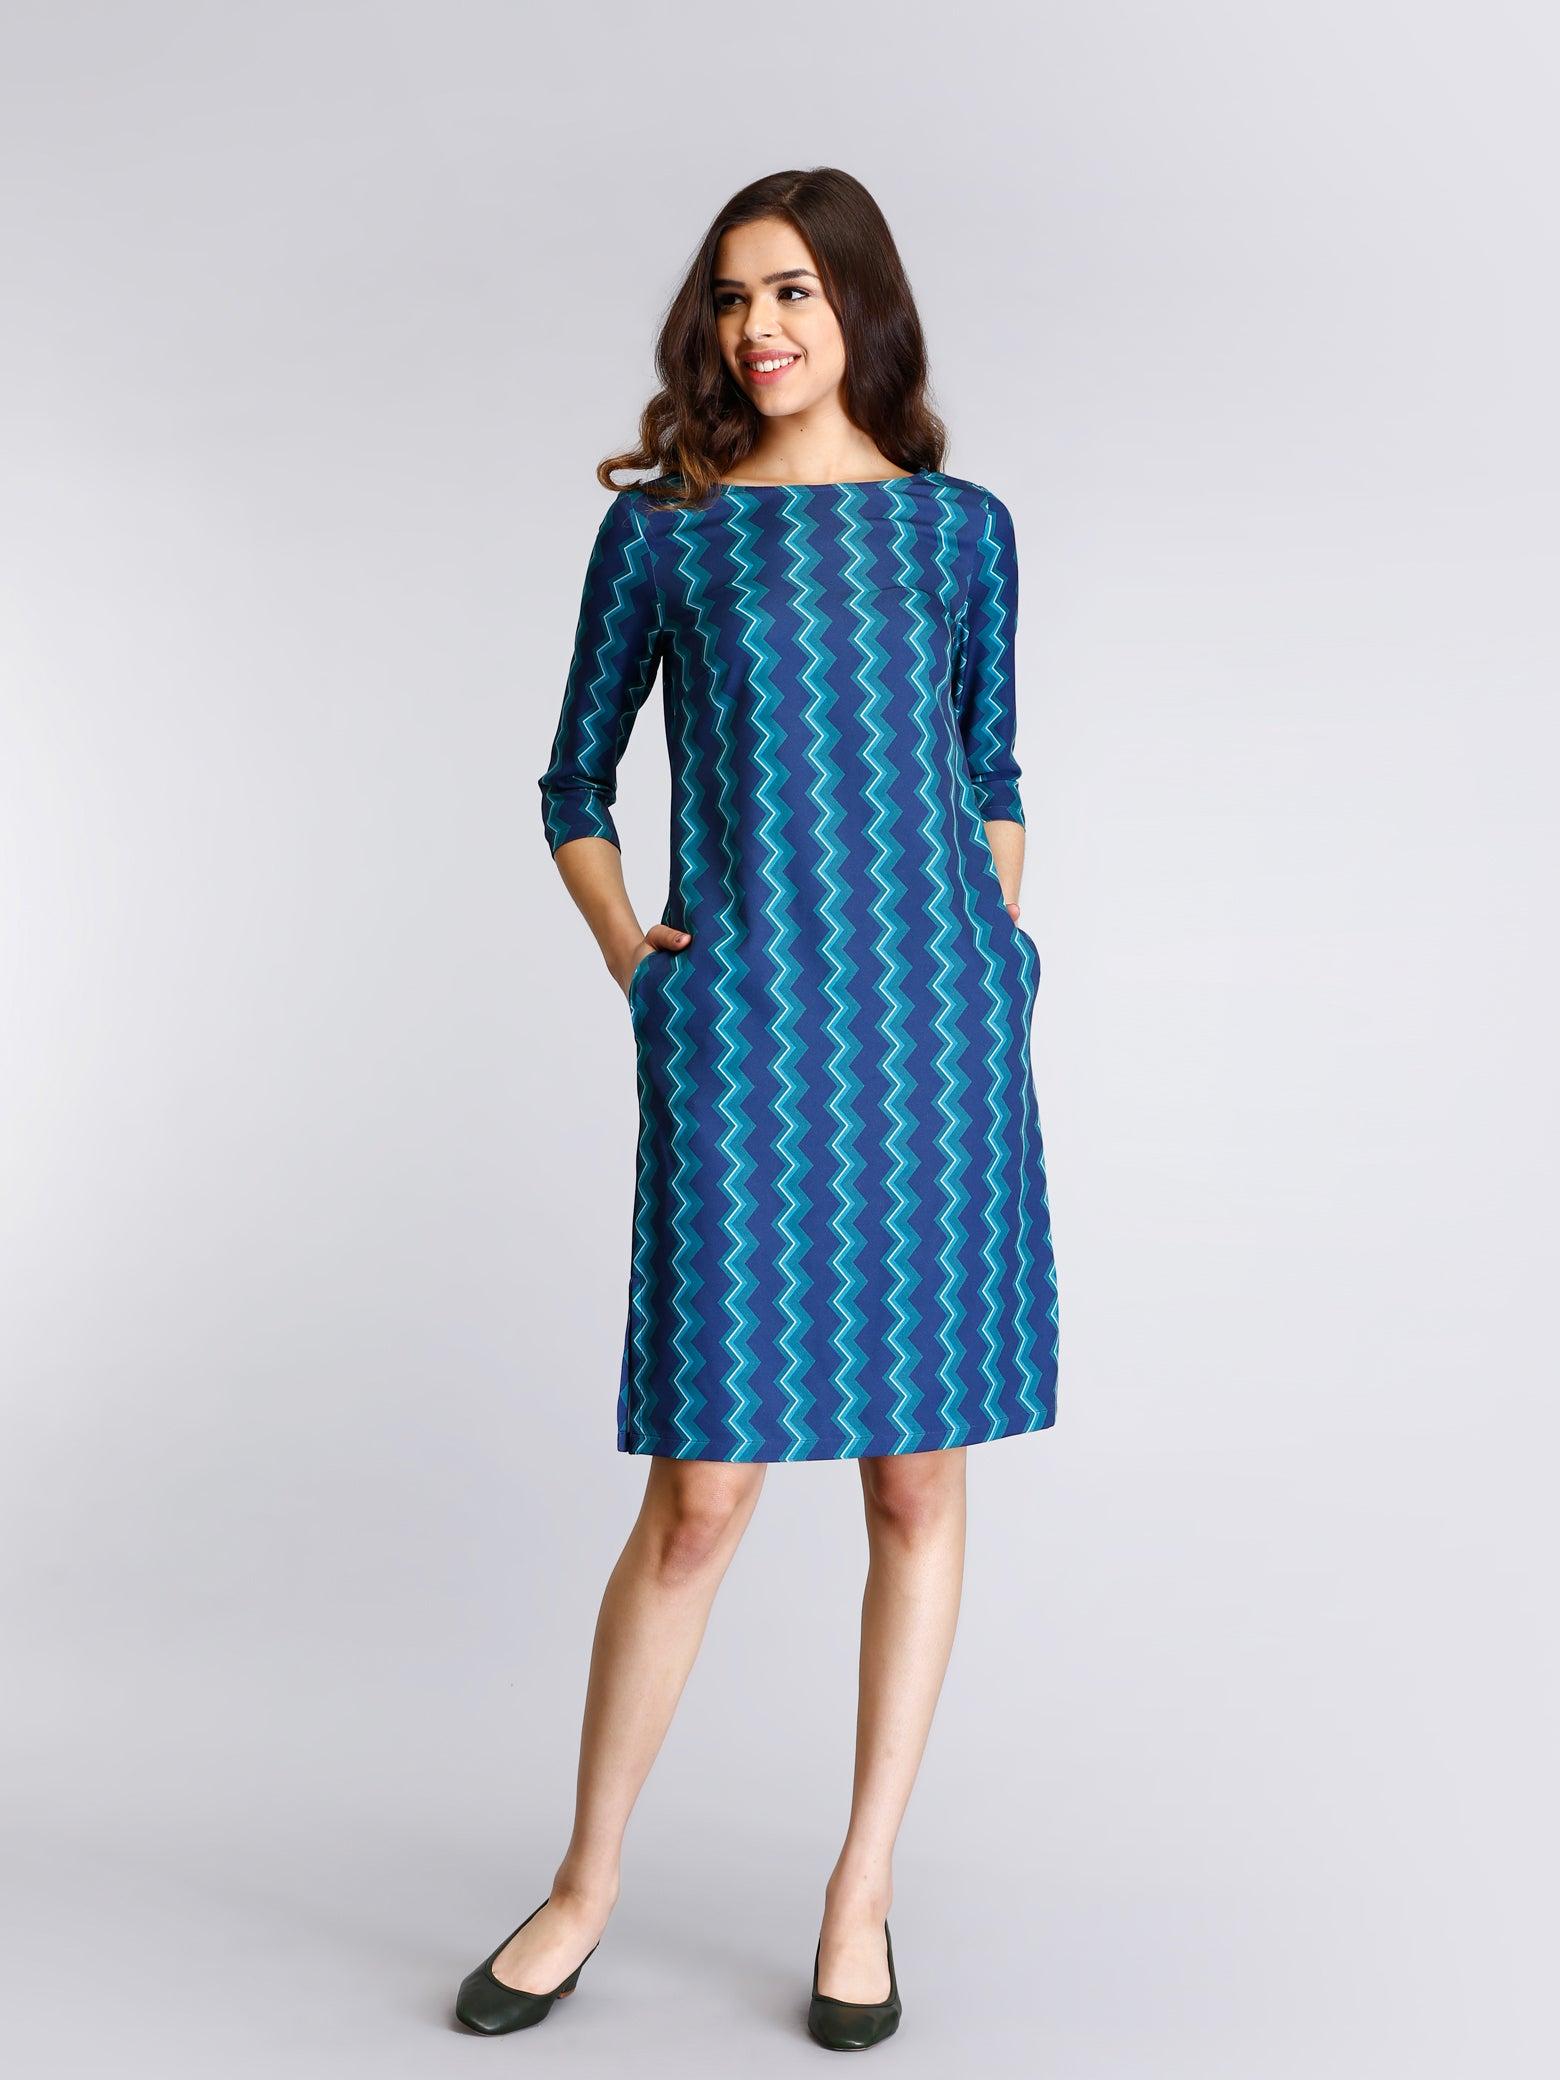 Boat Neck Geometric Print Shift Dress - Blue and Green| Formal Dresses